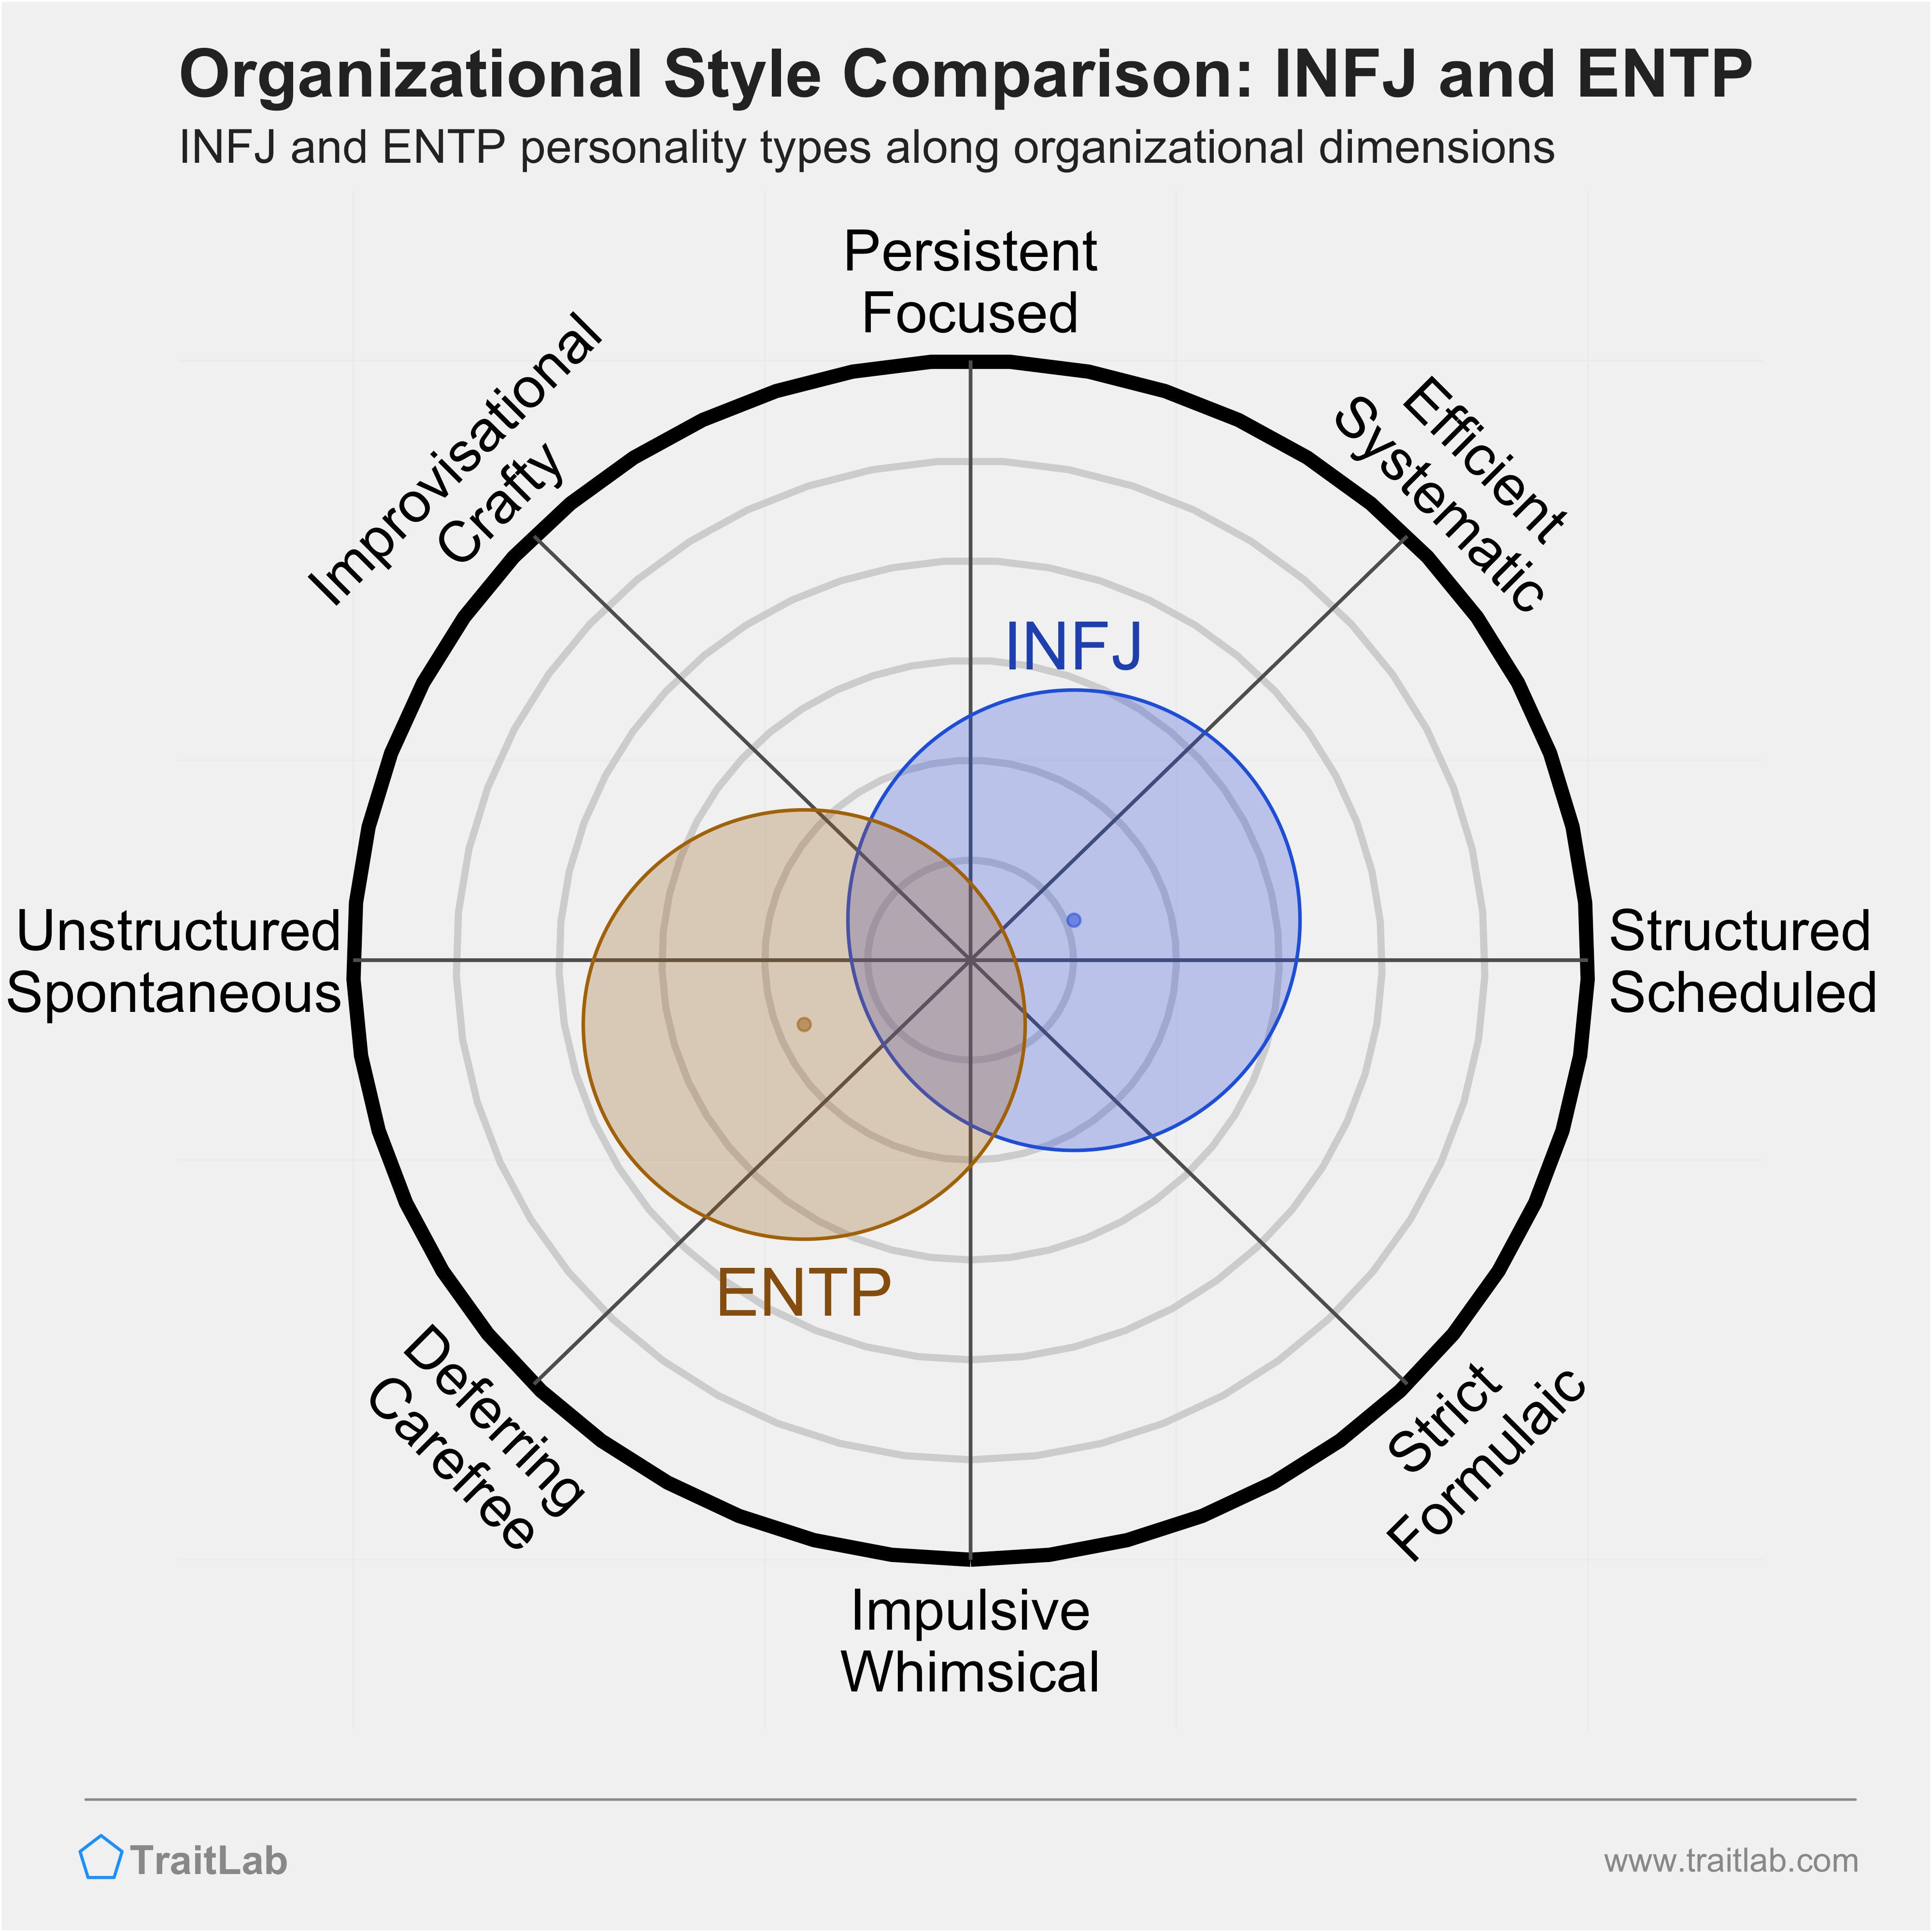 INFJ and ENTP comparison across organizational dimensions